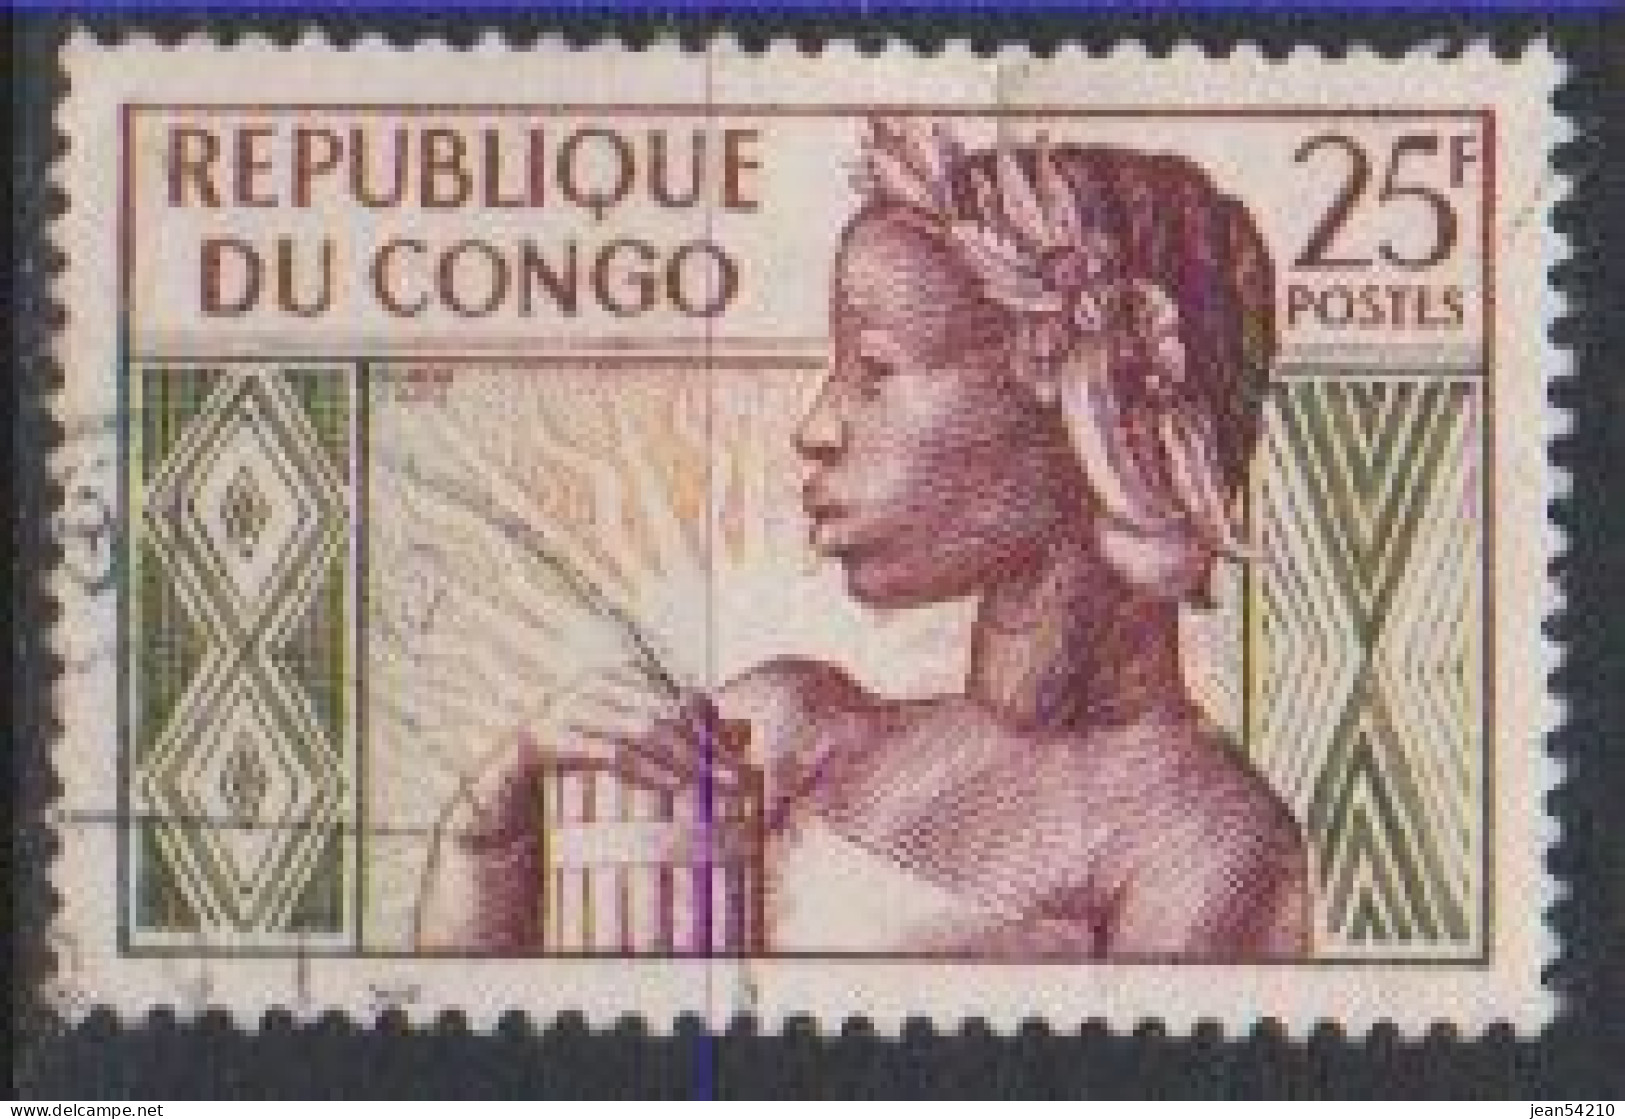 CONGO - Timbre N°135 Oblitéré - Used